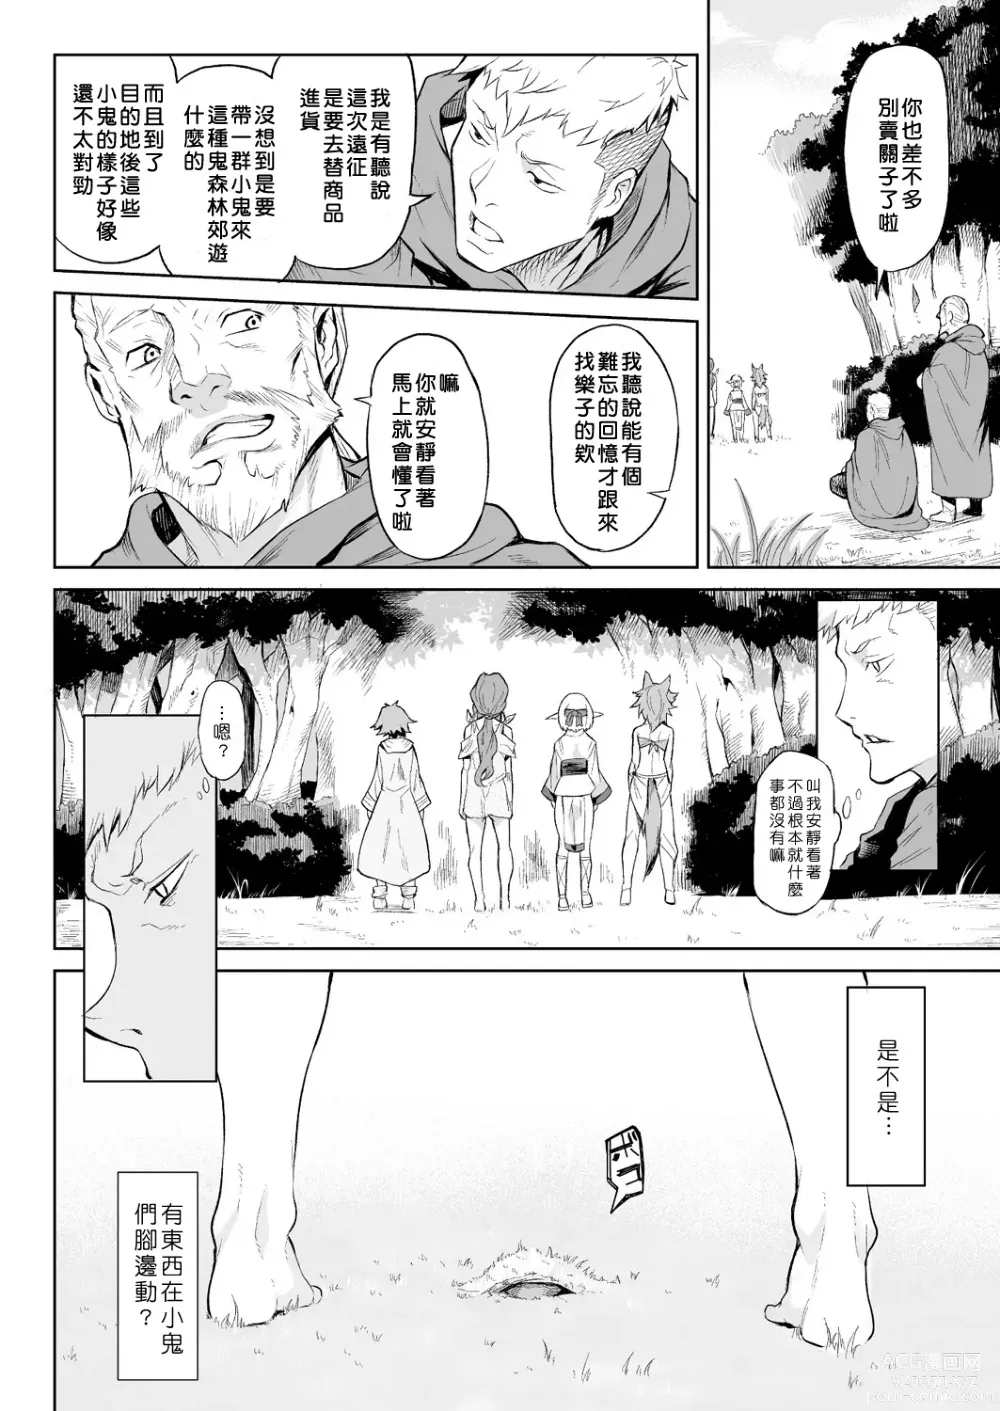 Page 7 of manga Ishu Kitan